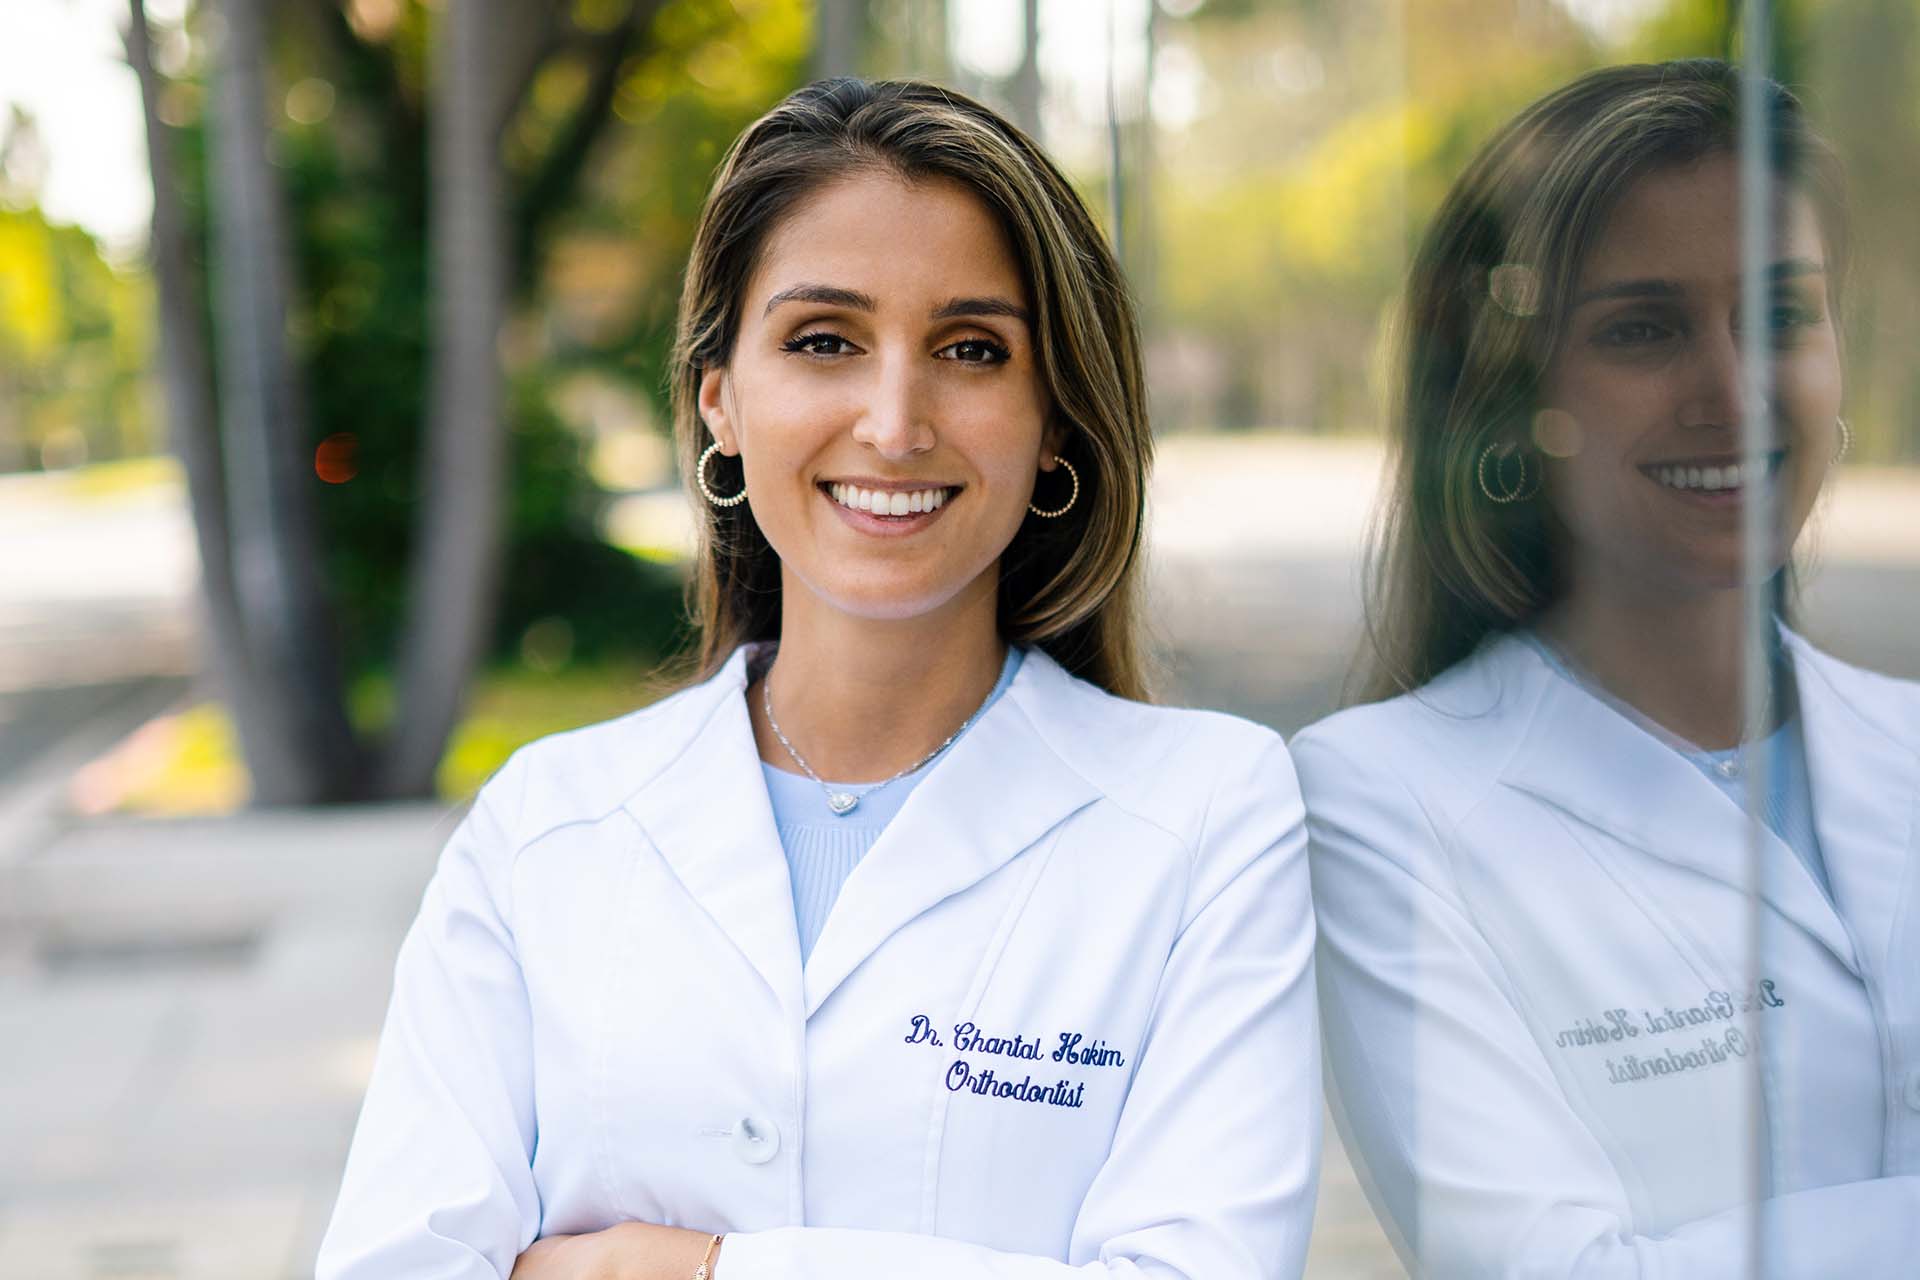 Dr Chantal Hakim of the Orthospaceship - Hakim Orthodontics serving Holmby Hills, Los Angeles